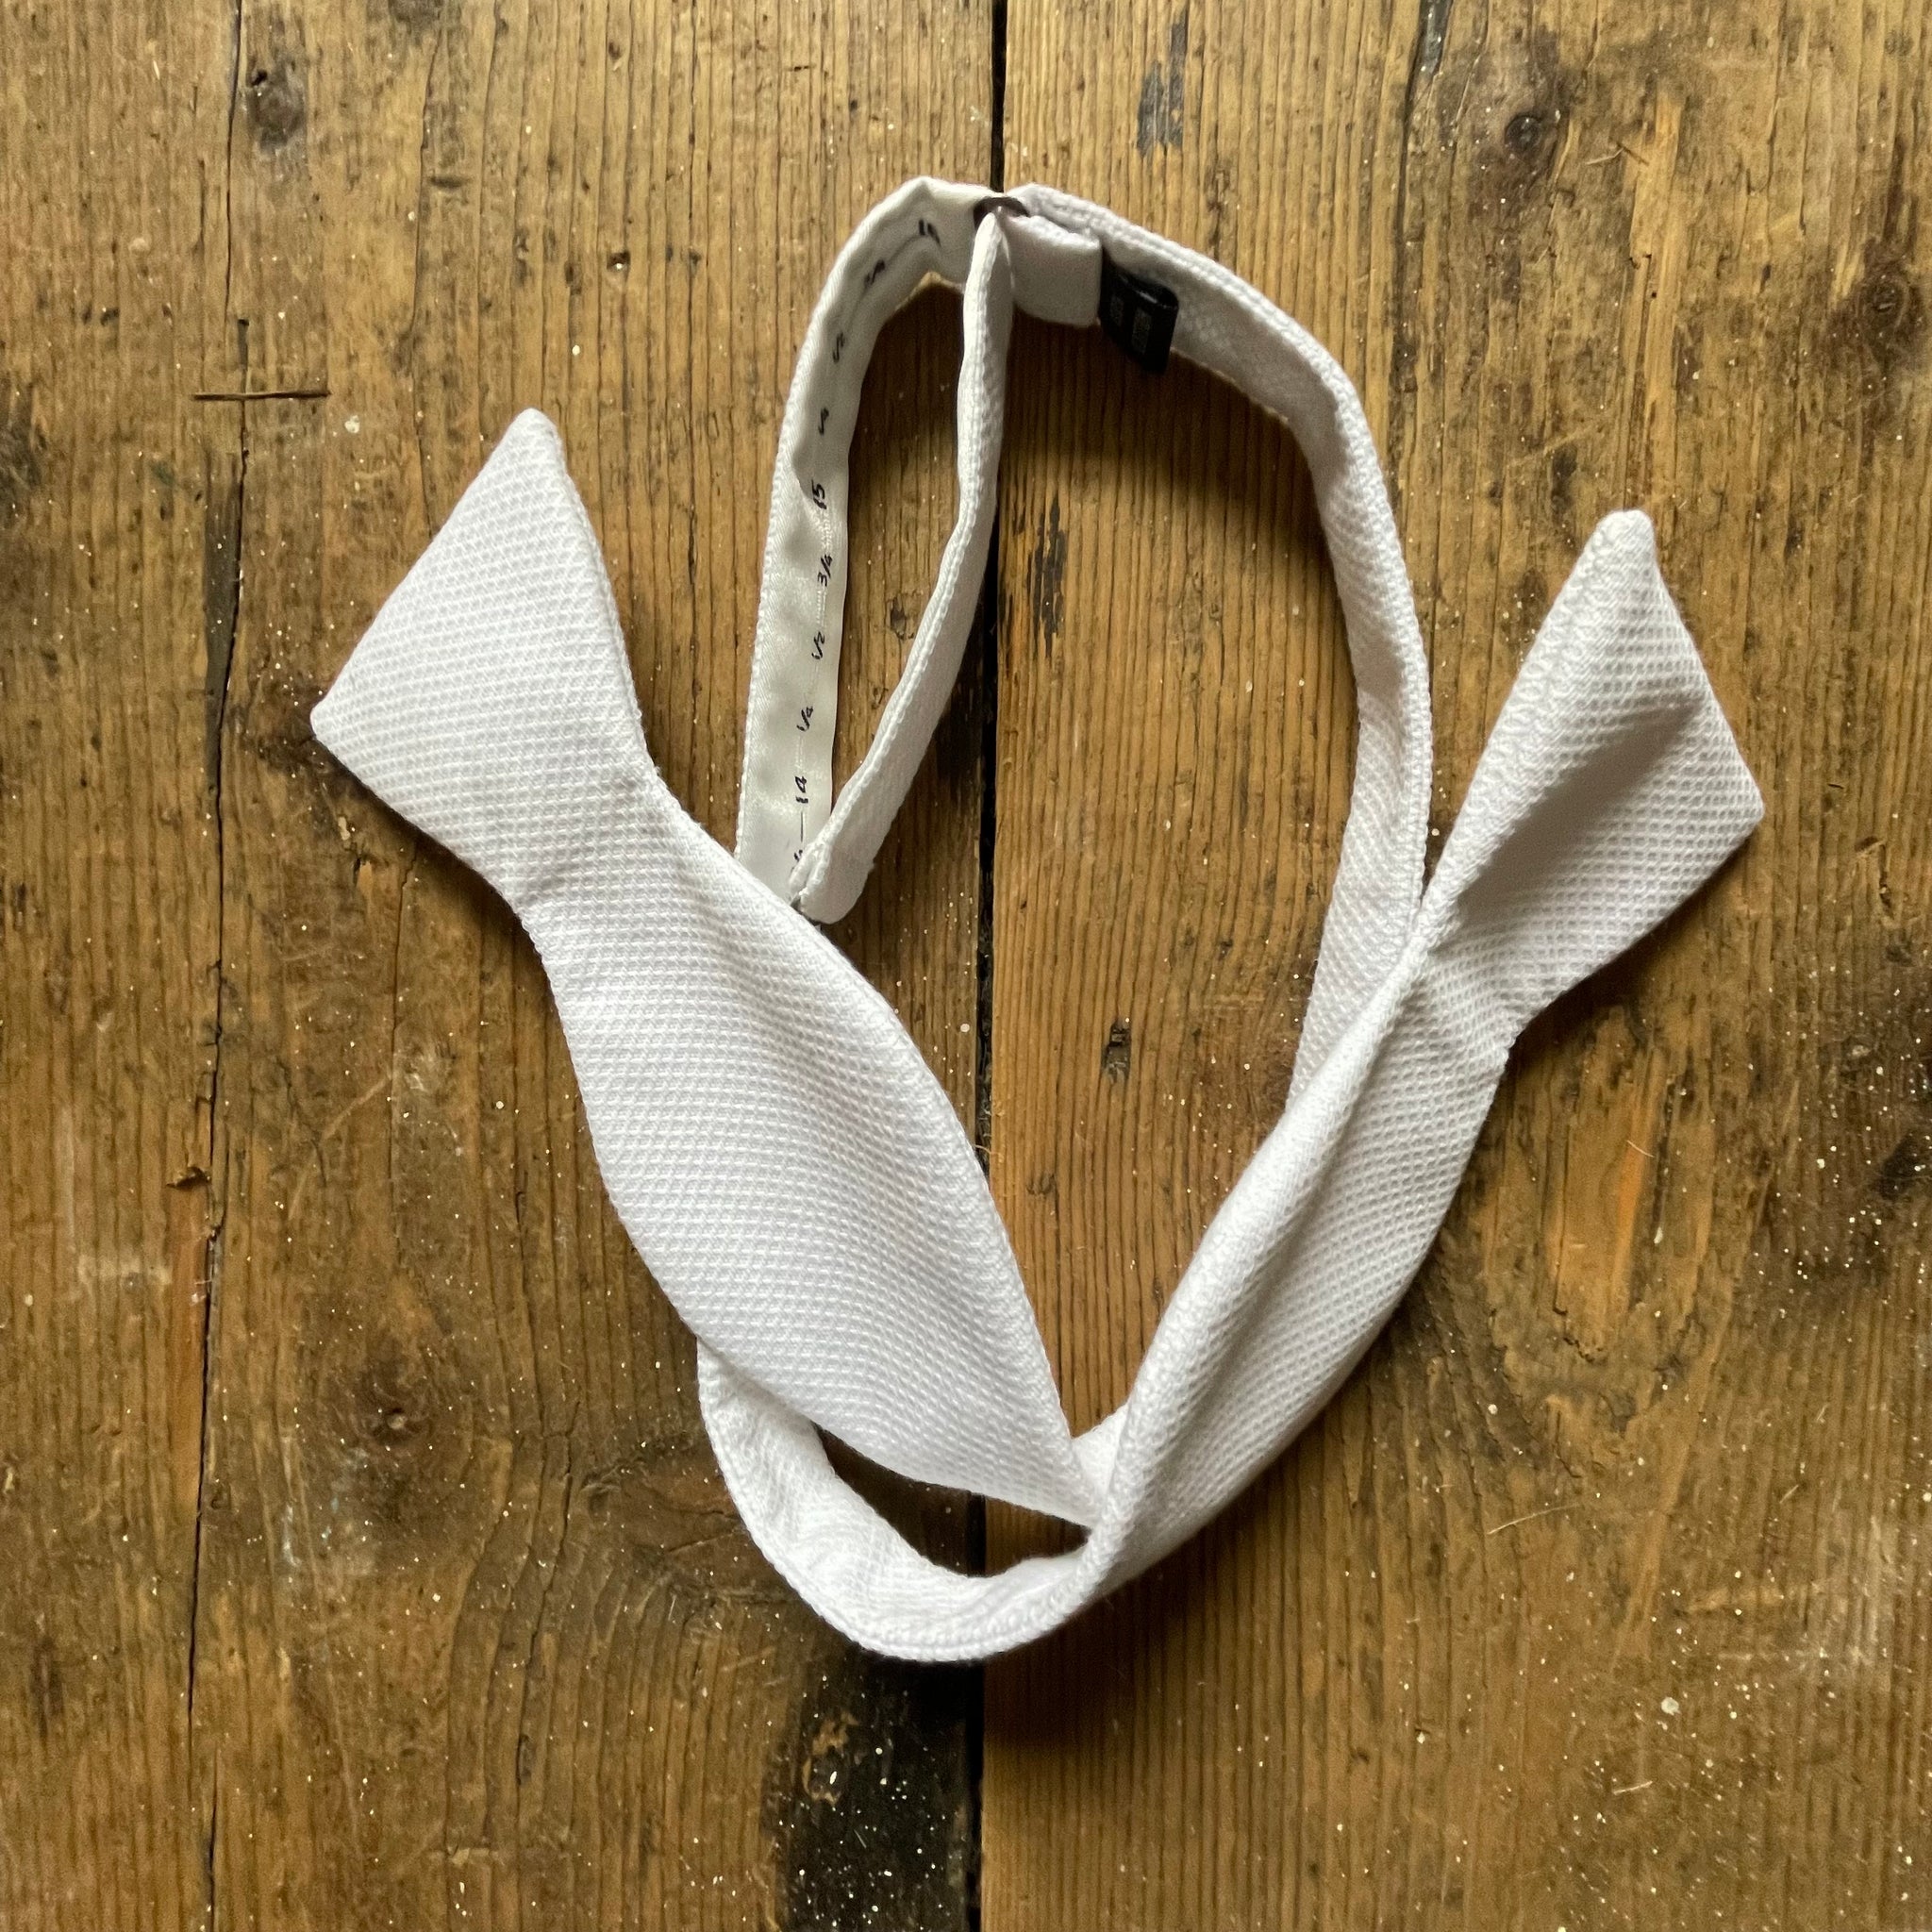 Regent - Cotton Bow Tie - White